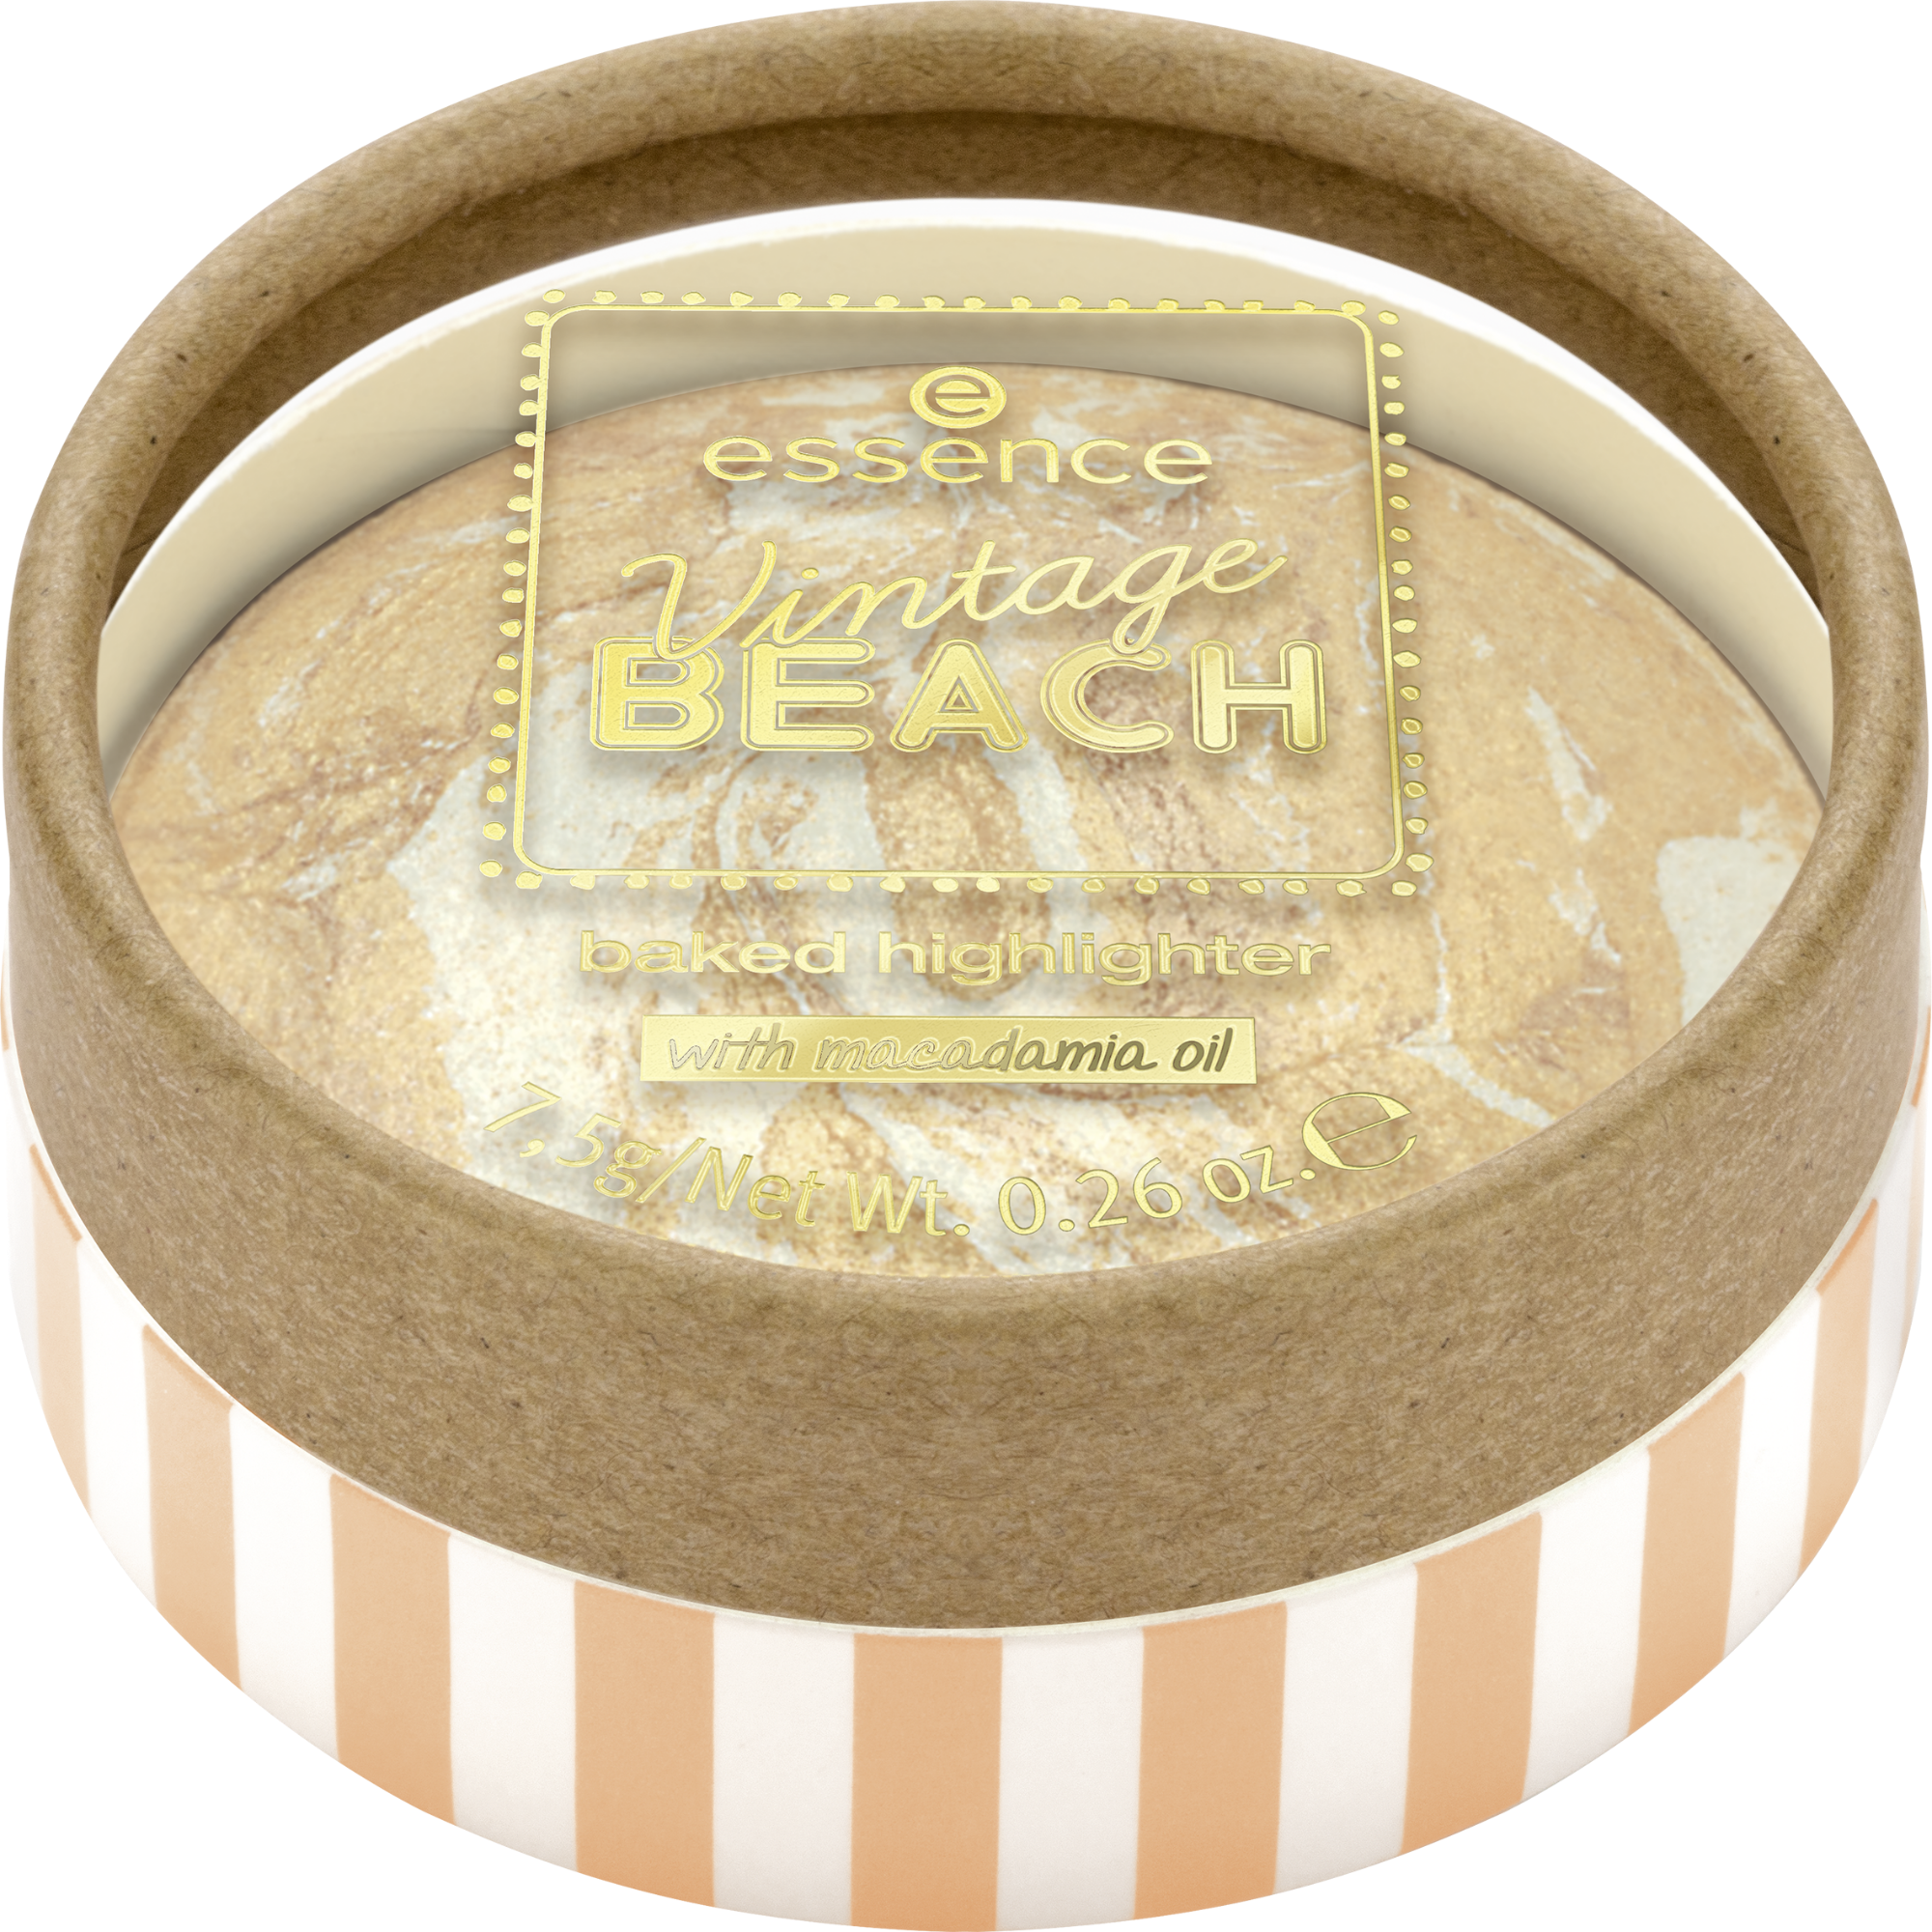 Vintage BEACH baked highlighter